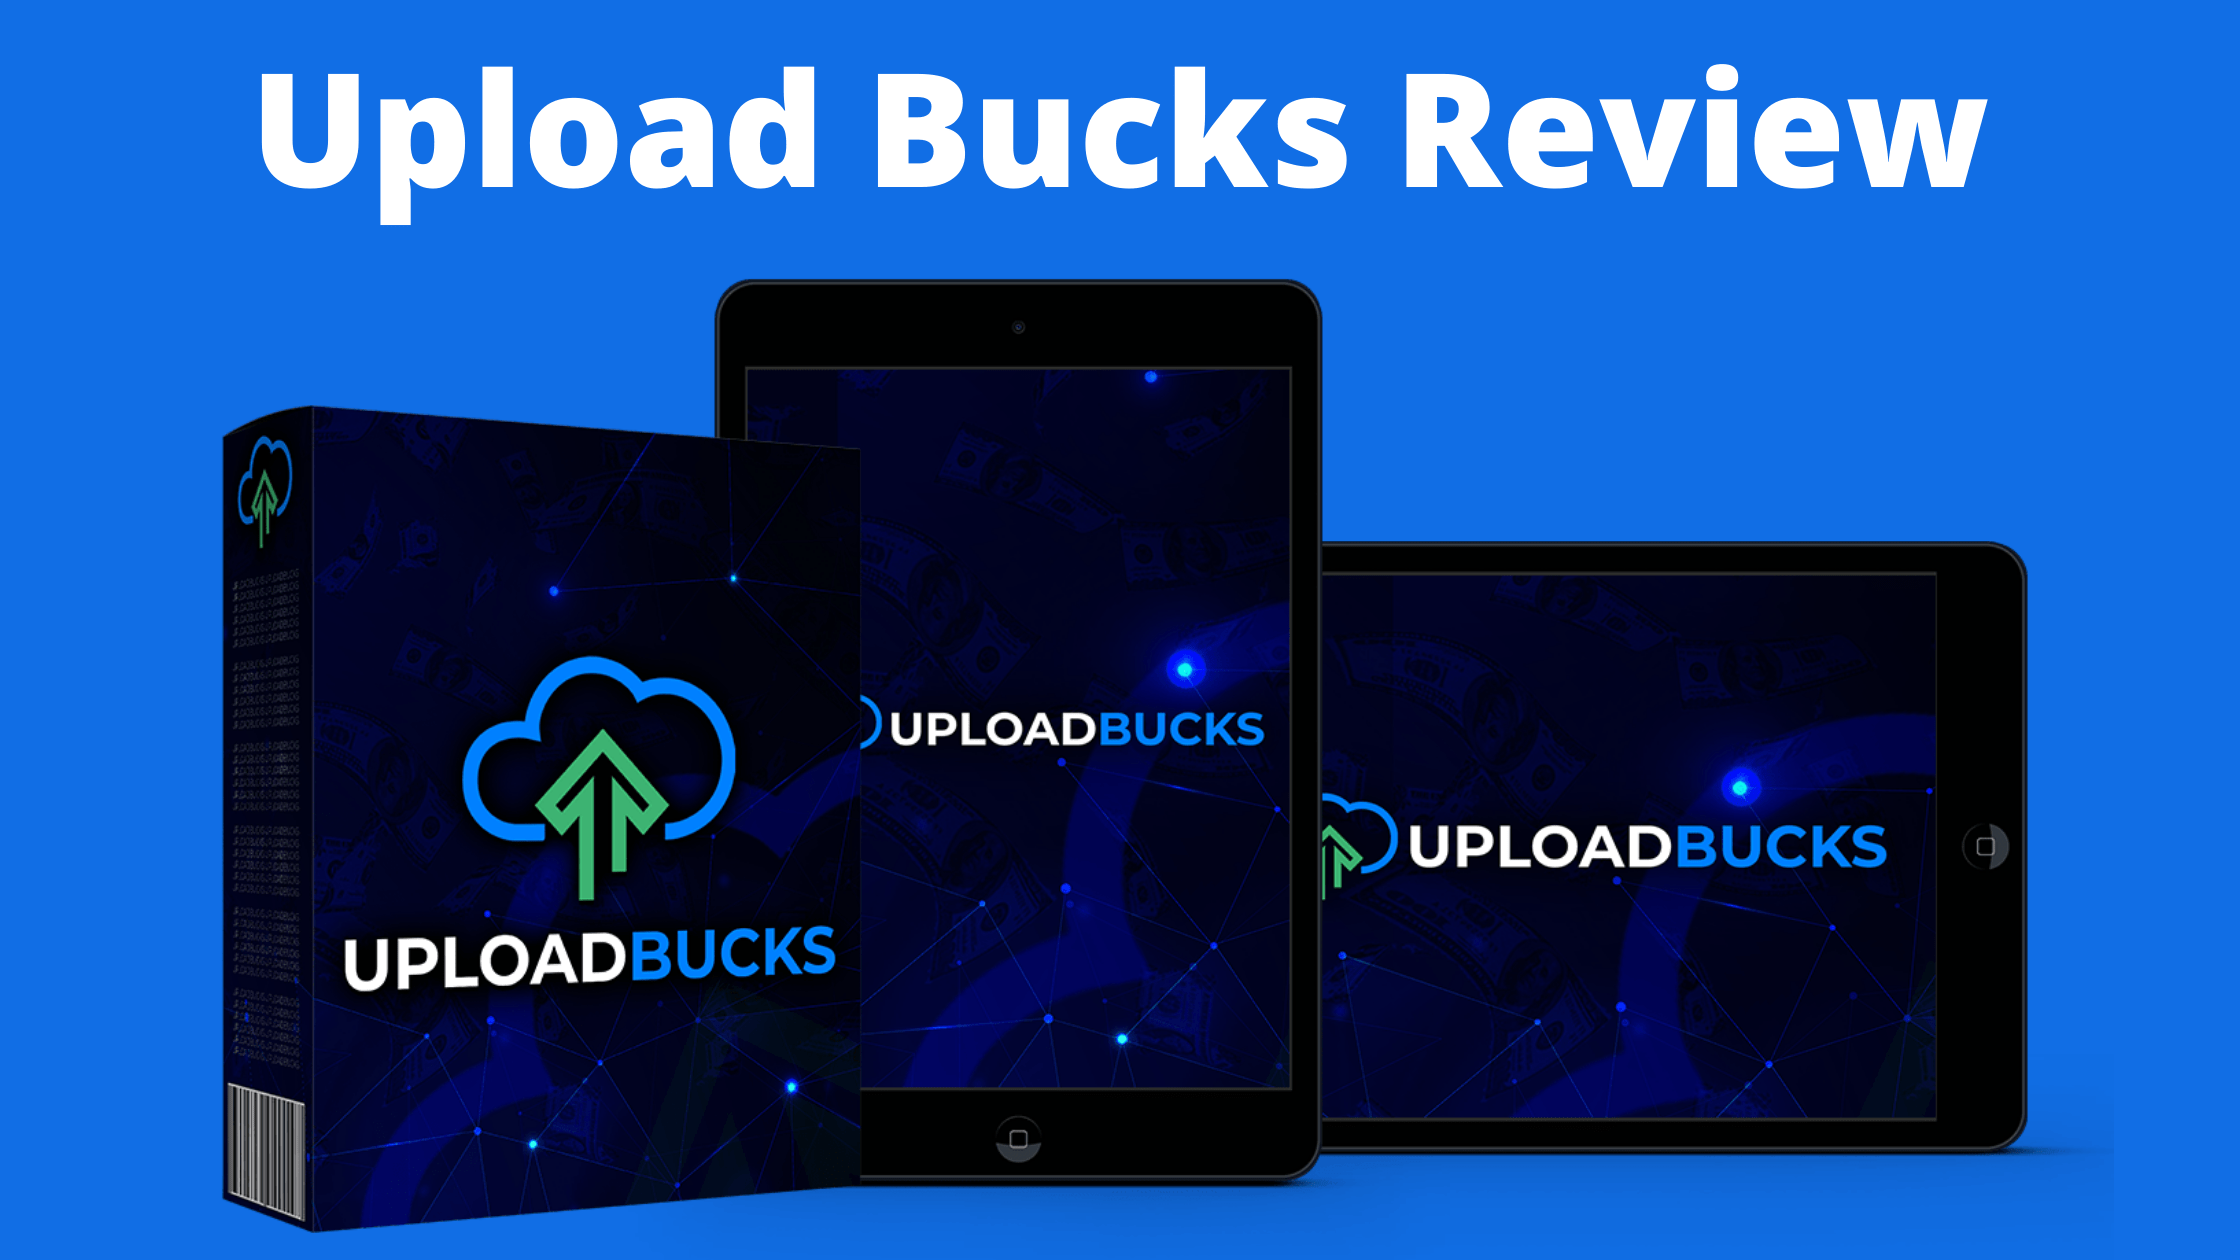 Upload Bucks Review